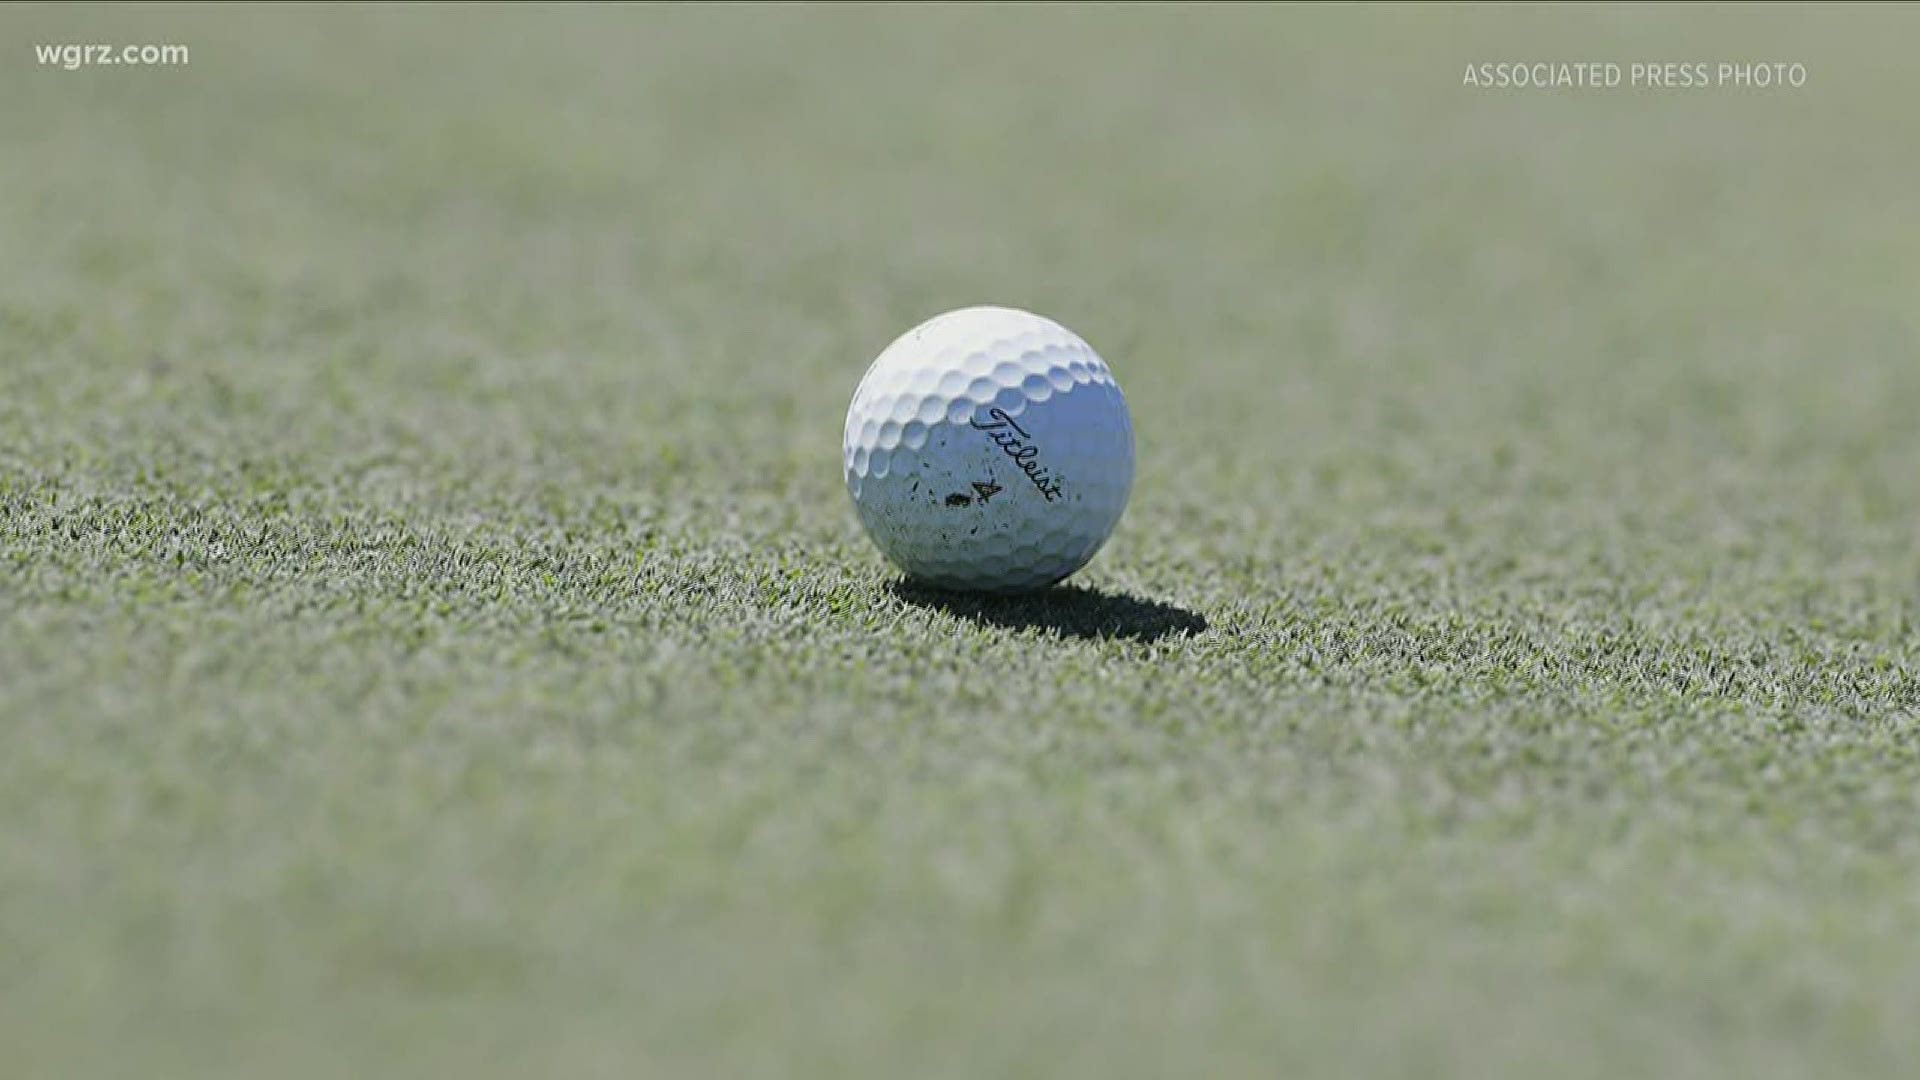 NY state closes golf courses indefinitely